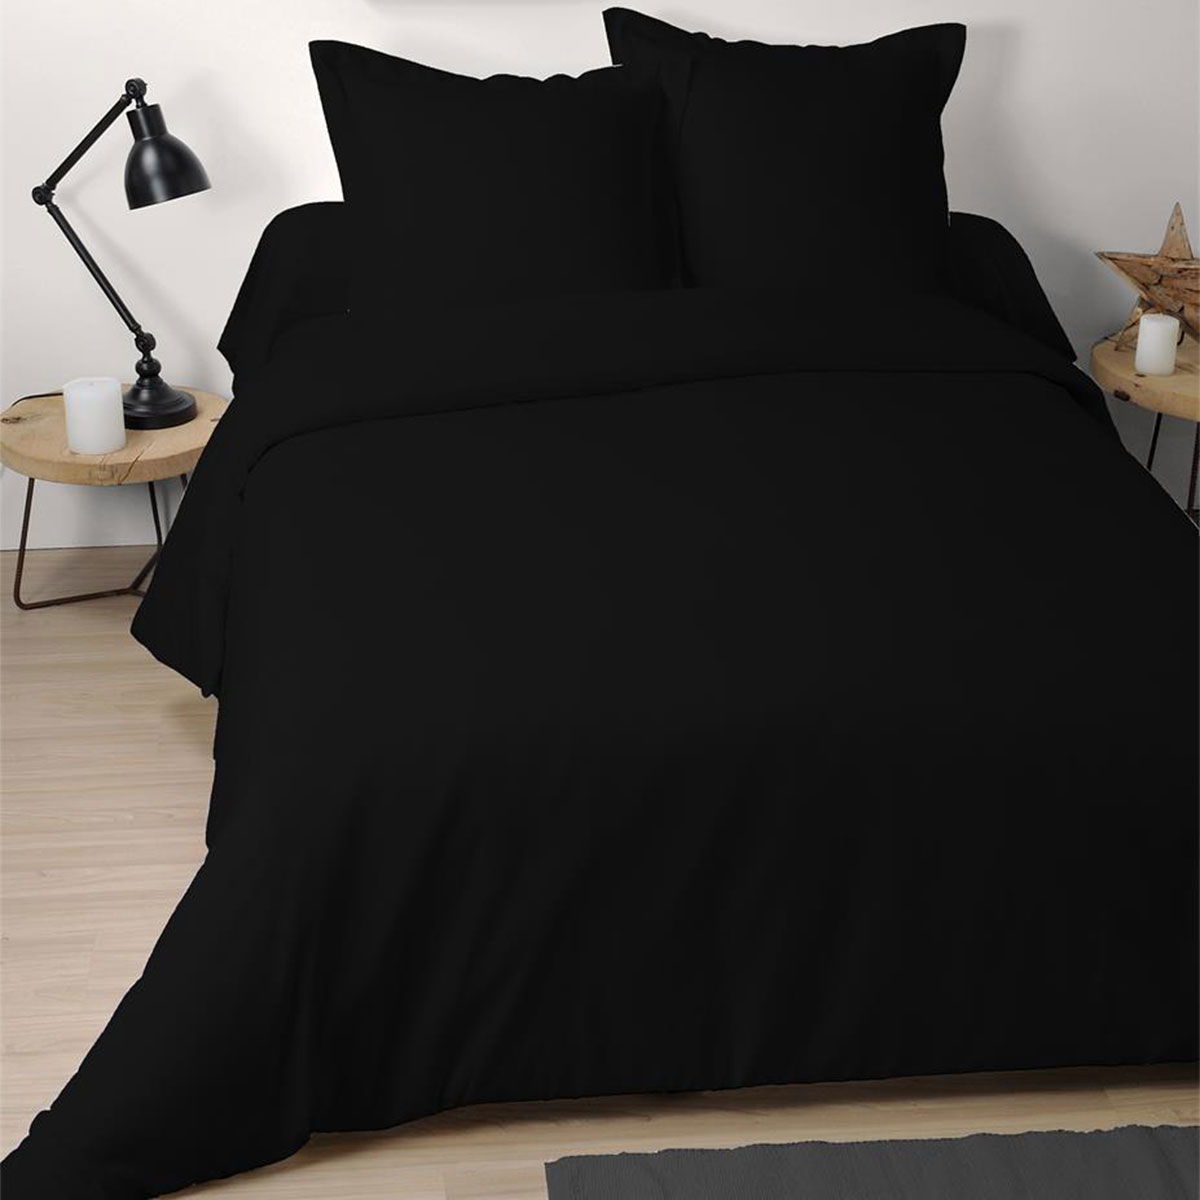 Une taie d'oreiller 65x65 cm - Noir